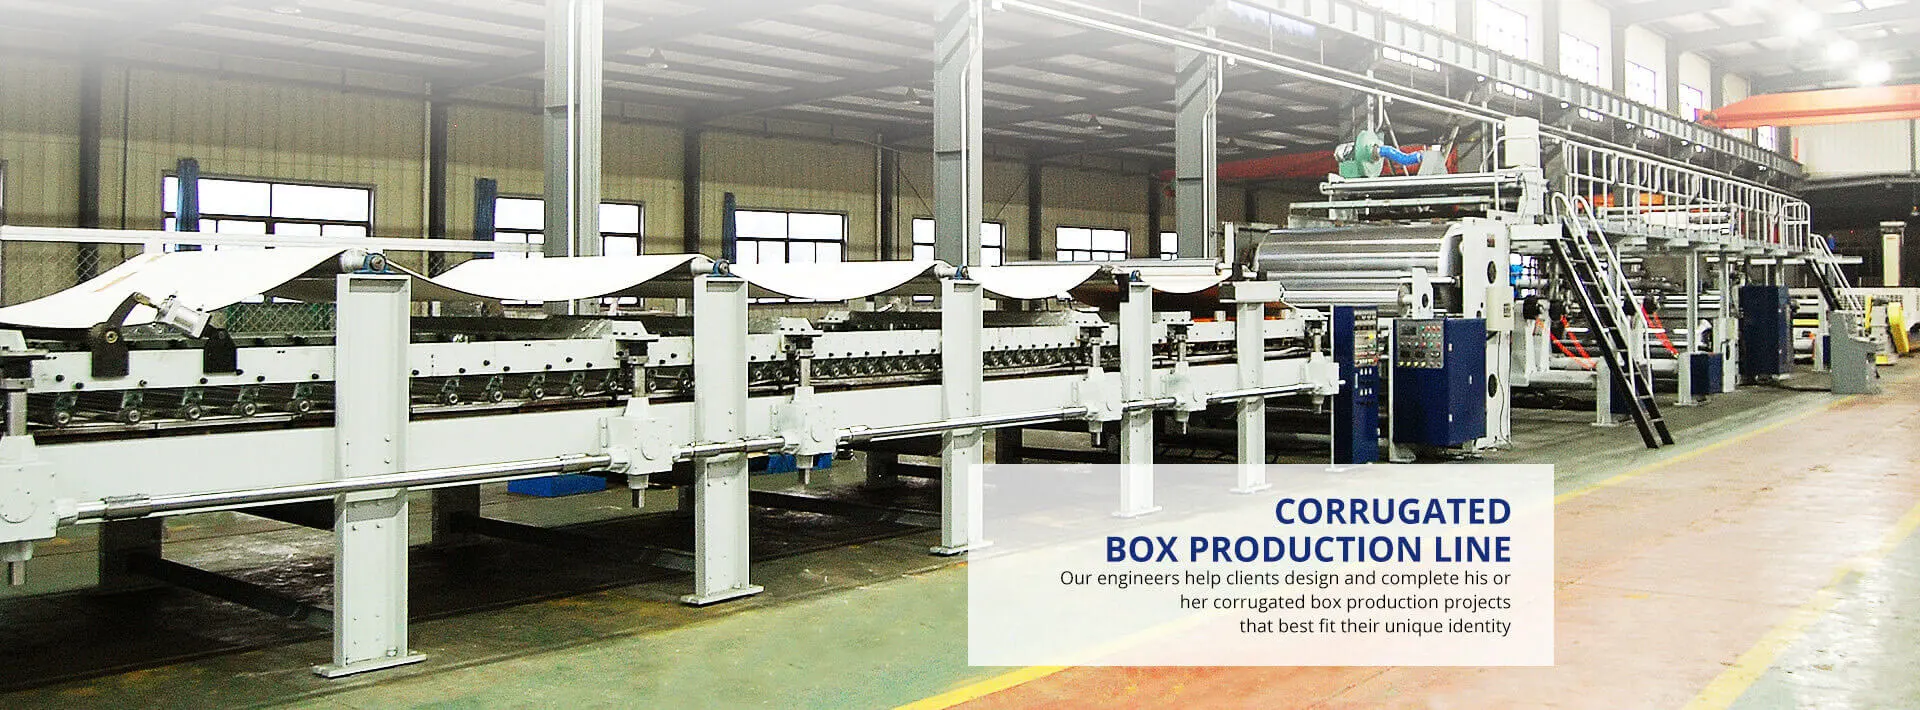 Corrugator Cardboard Production Line